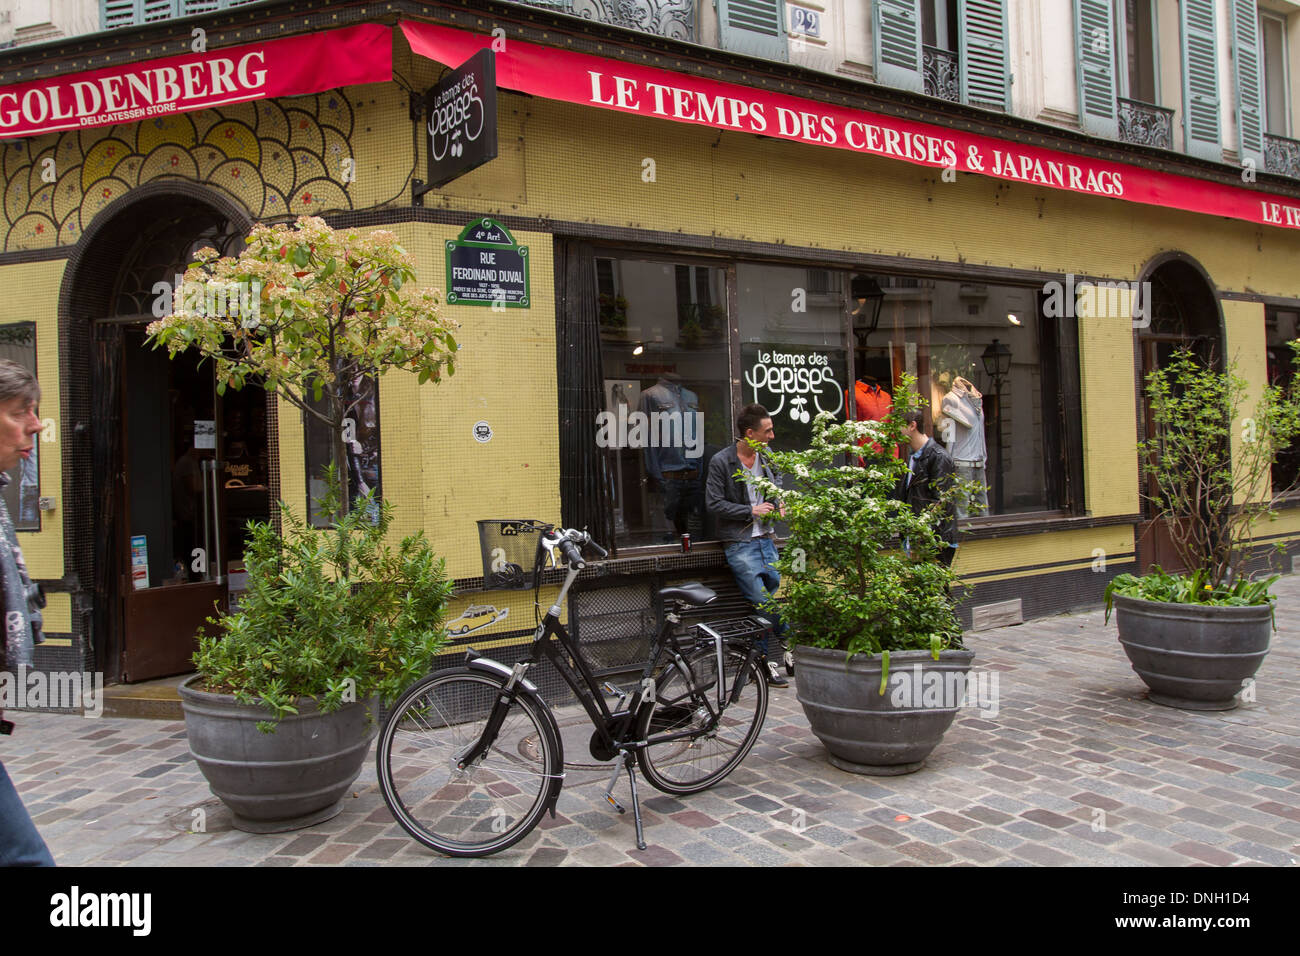 FORMER JO GOLDENBERG BOUTIQUE NOW A CLOTHING STORE, 4TH ARRONDISSEMENT,  PARIS, FRANCE Stock Photo - Alamy